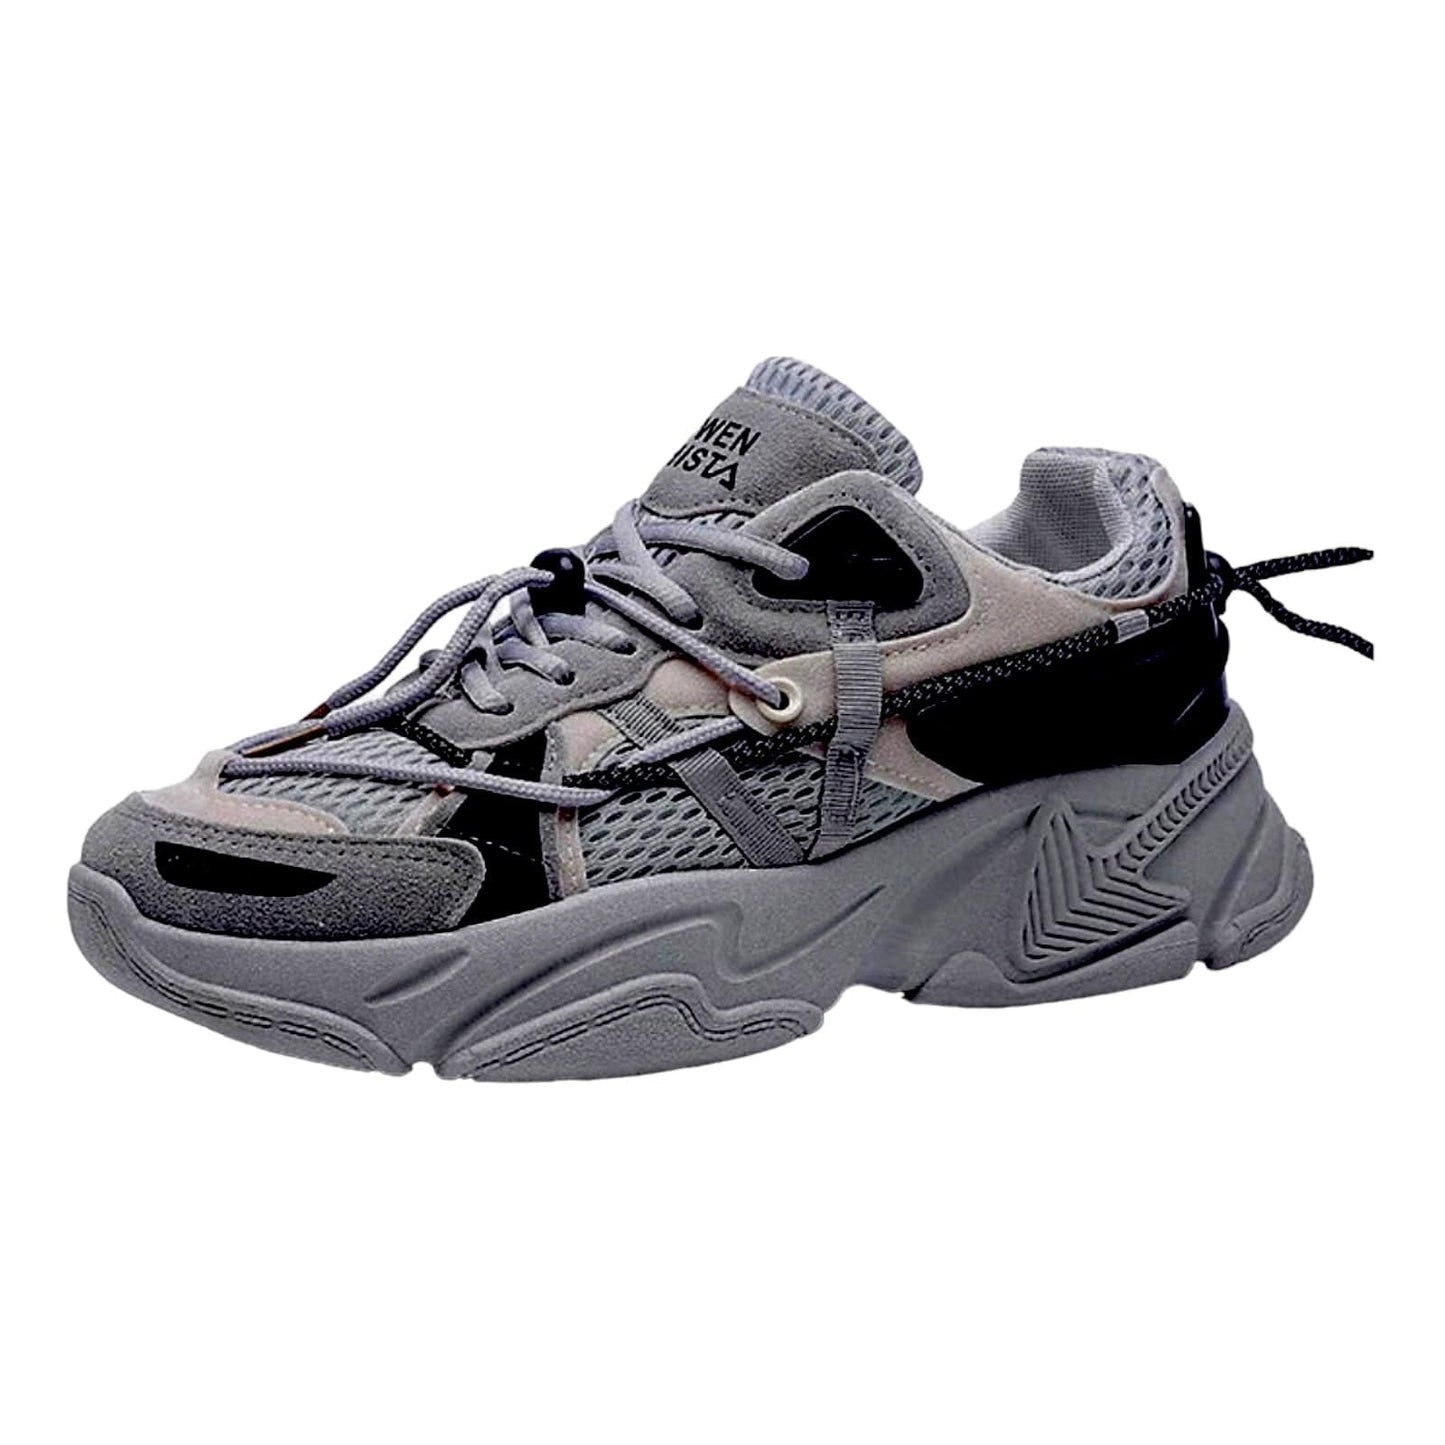 grey sneakers dark arrow flashlander left side